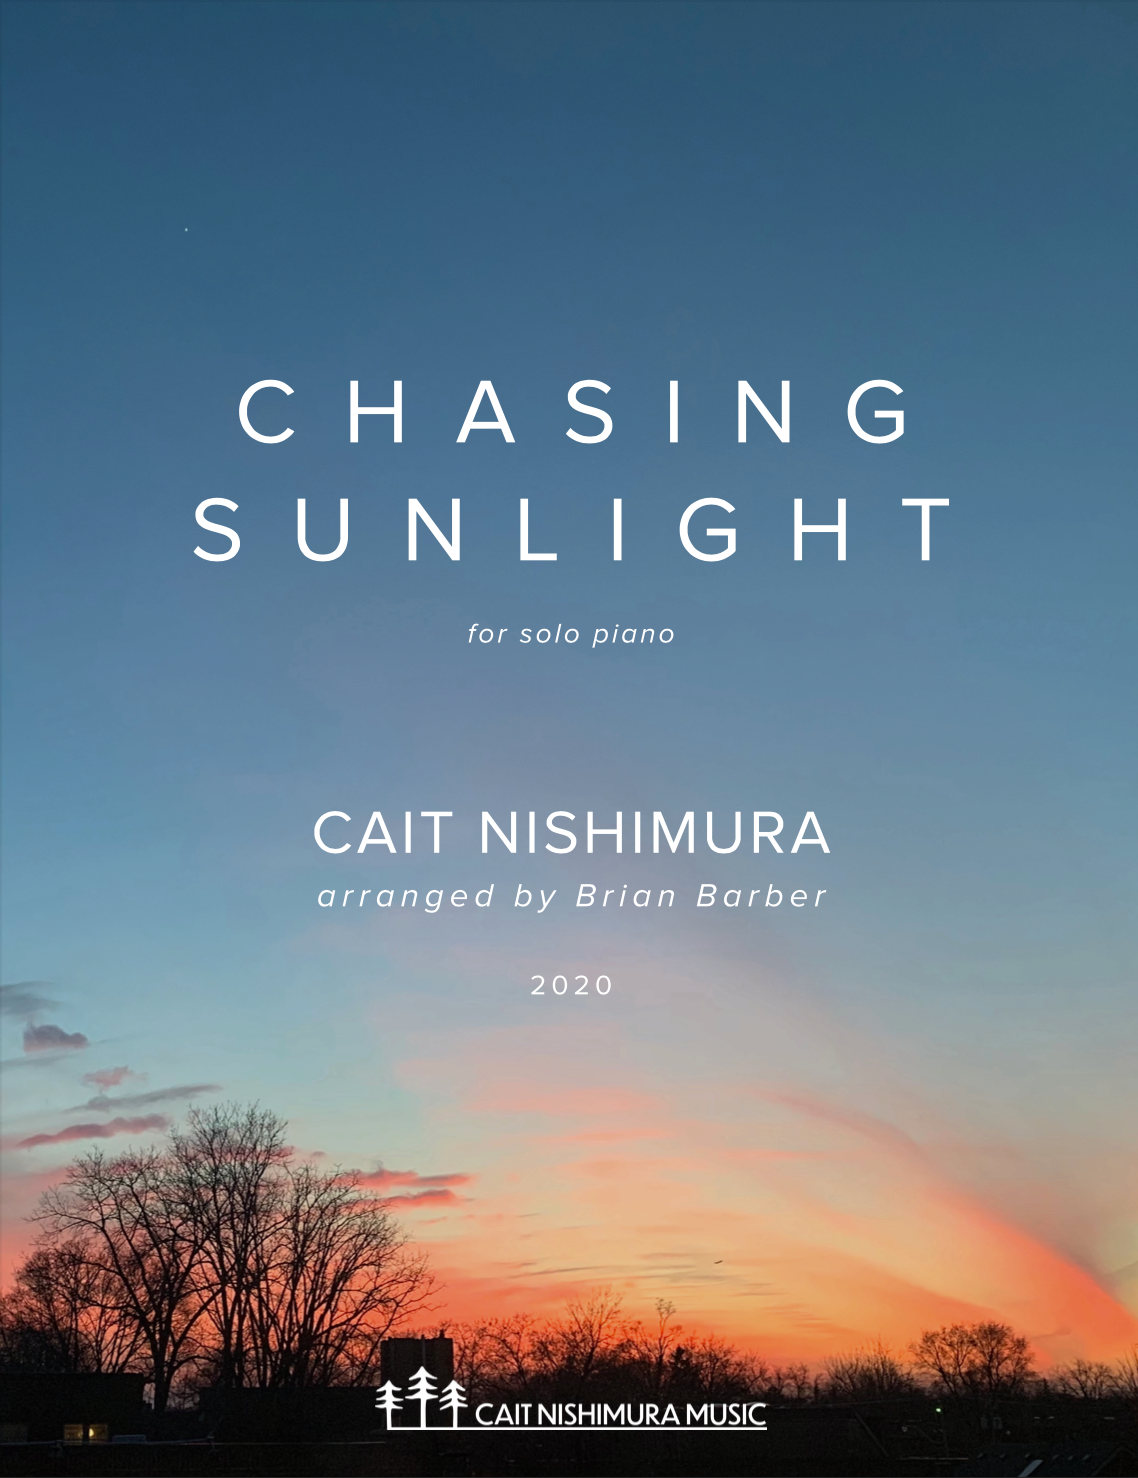 Chasing Sunlight (Piano Version) by Cait Nishimura